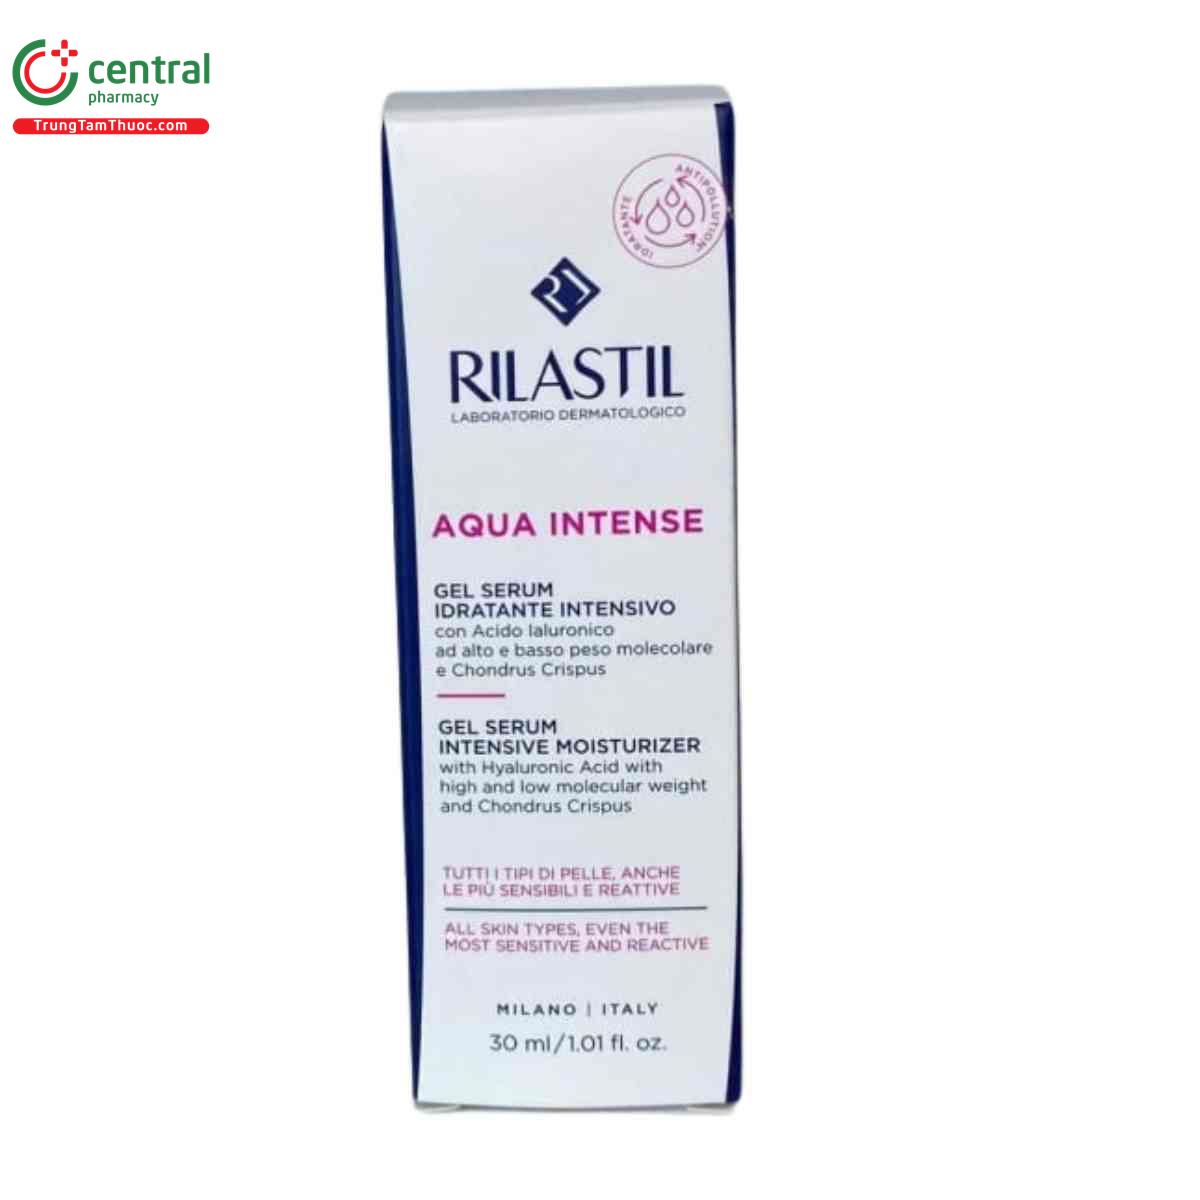 rilastil aqua intense gel serum 30ml 4 S7413